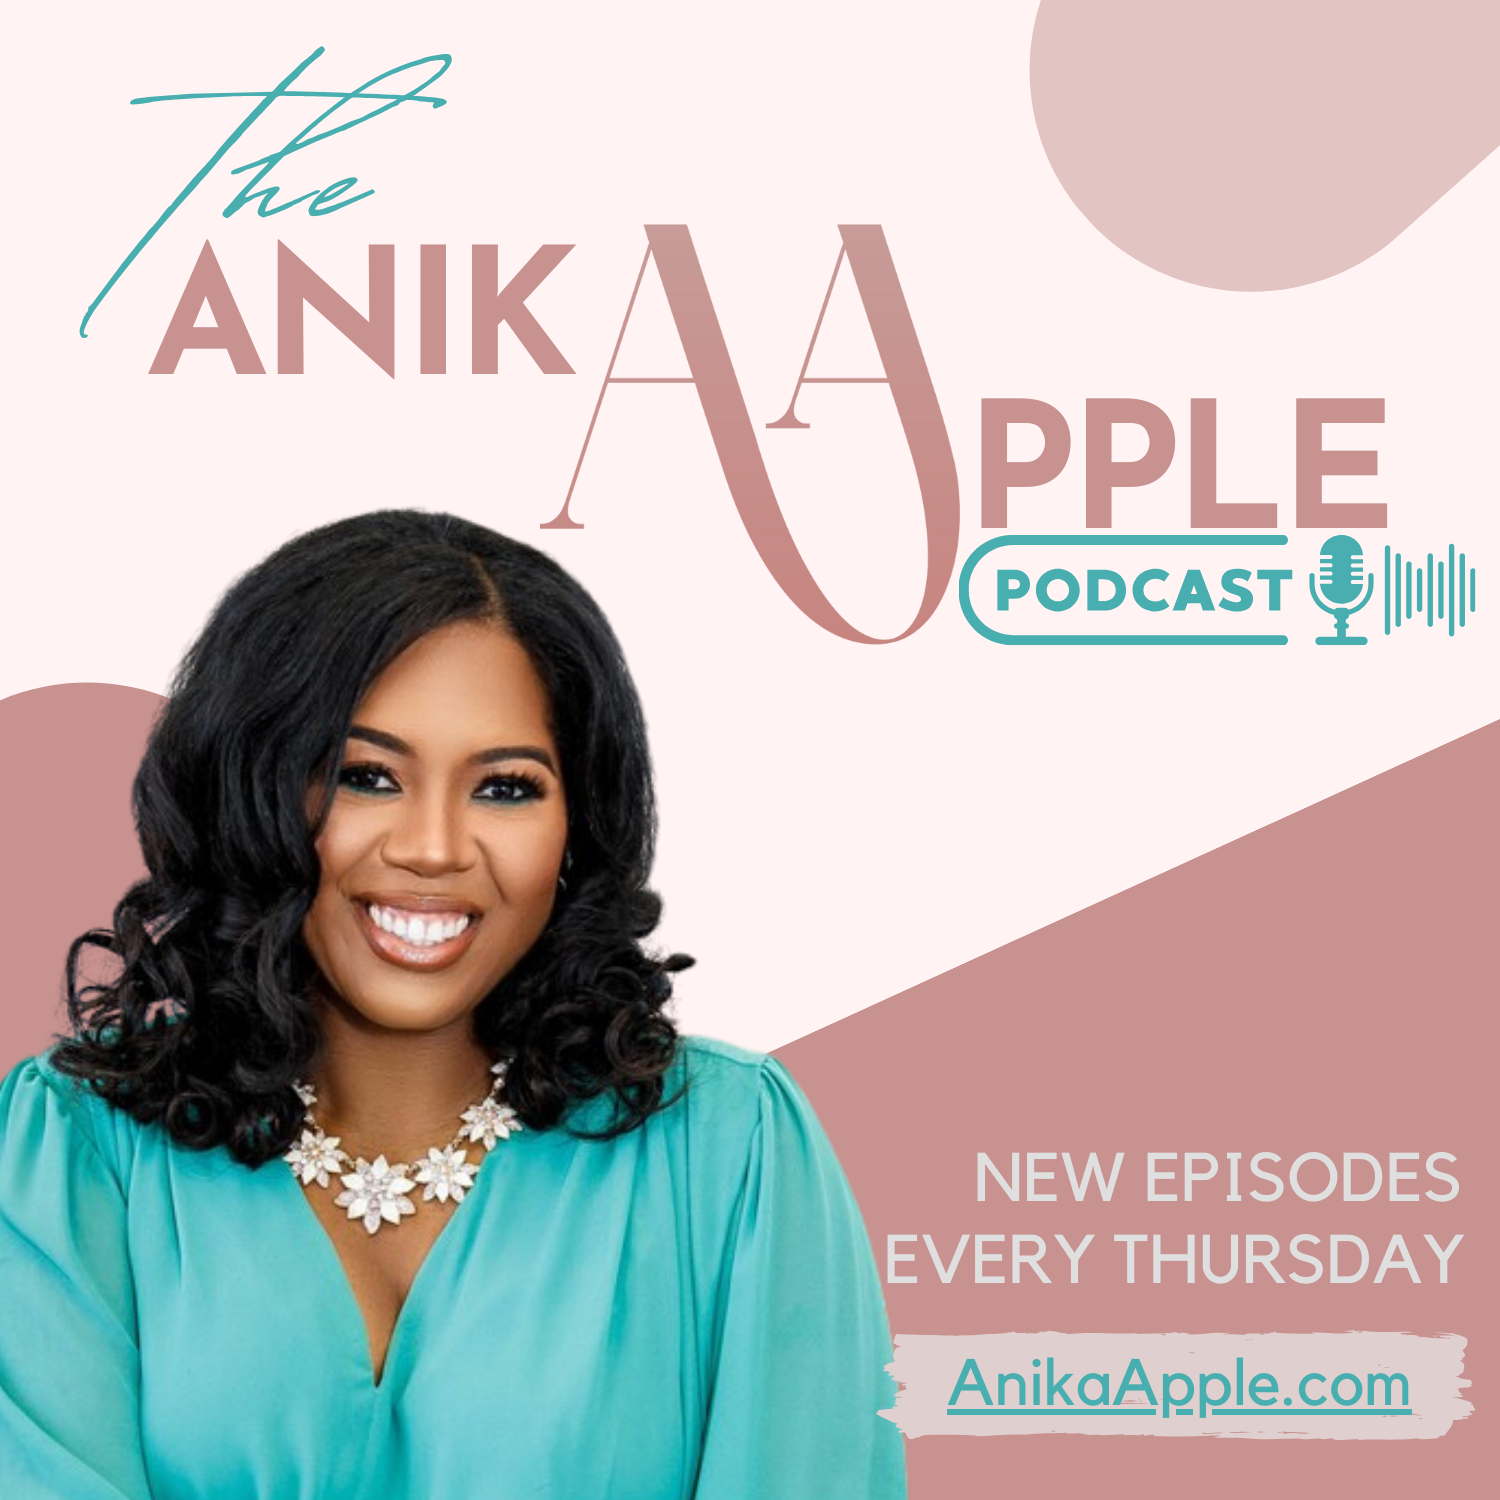 The Anika Apple Podcast